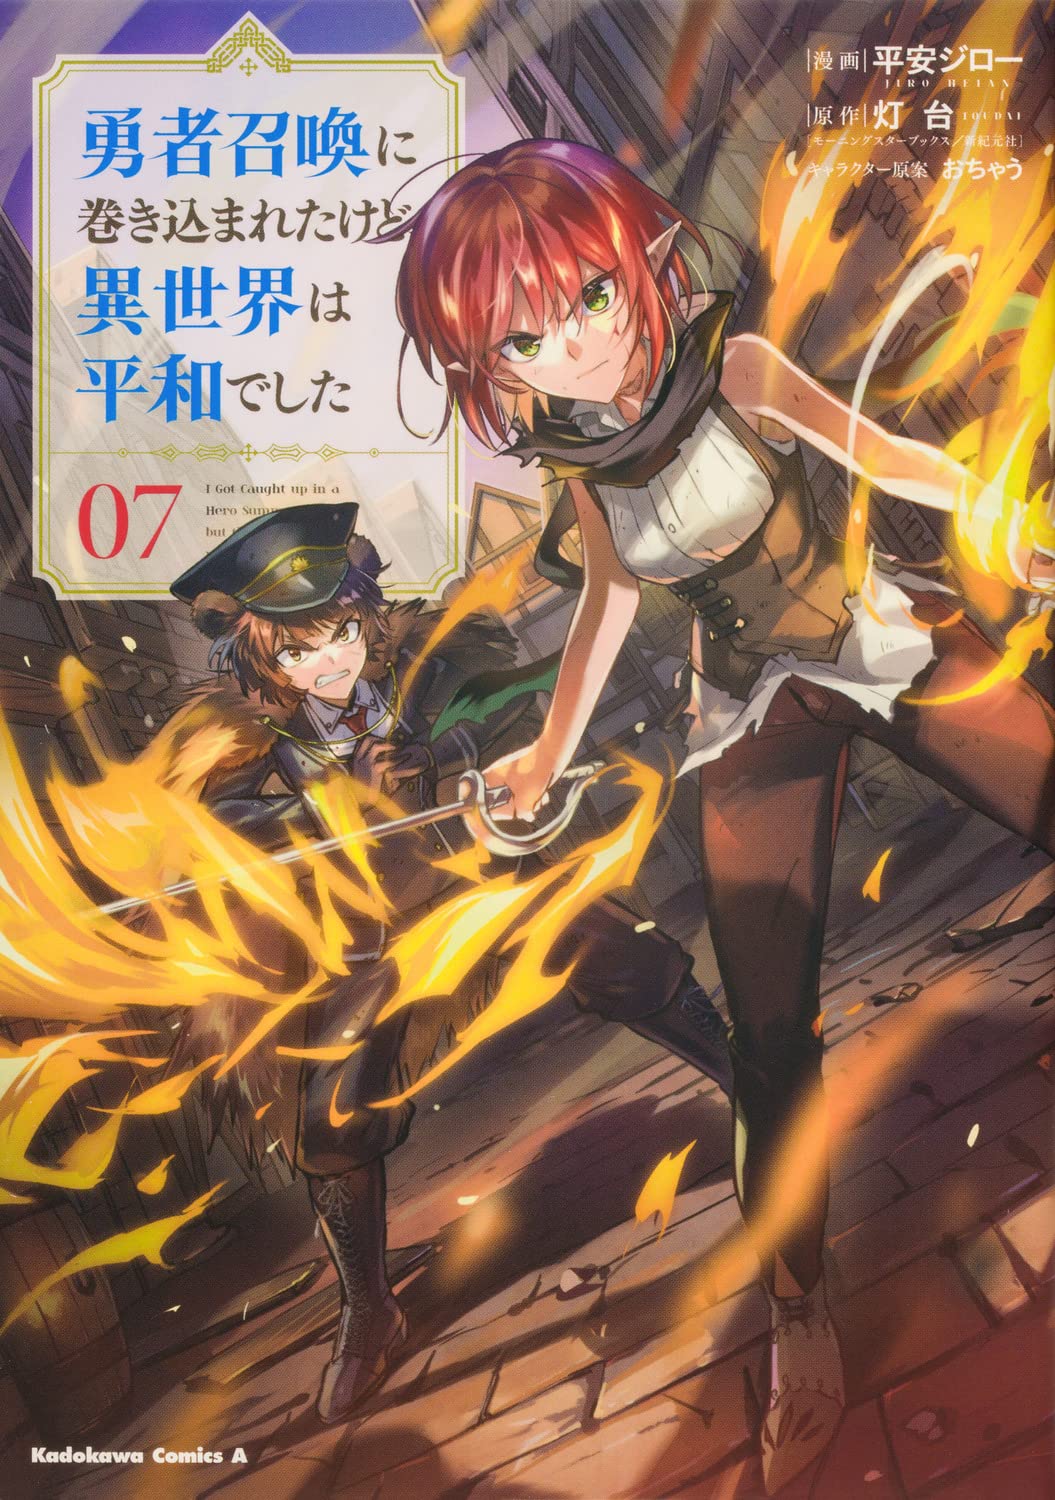 Read Yuusha Shoukan ni Makikomareta kedo, Isekai wa Heiwa deshita Manga  English [New Chapters] Online Free - MangaClash